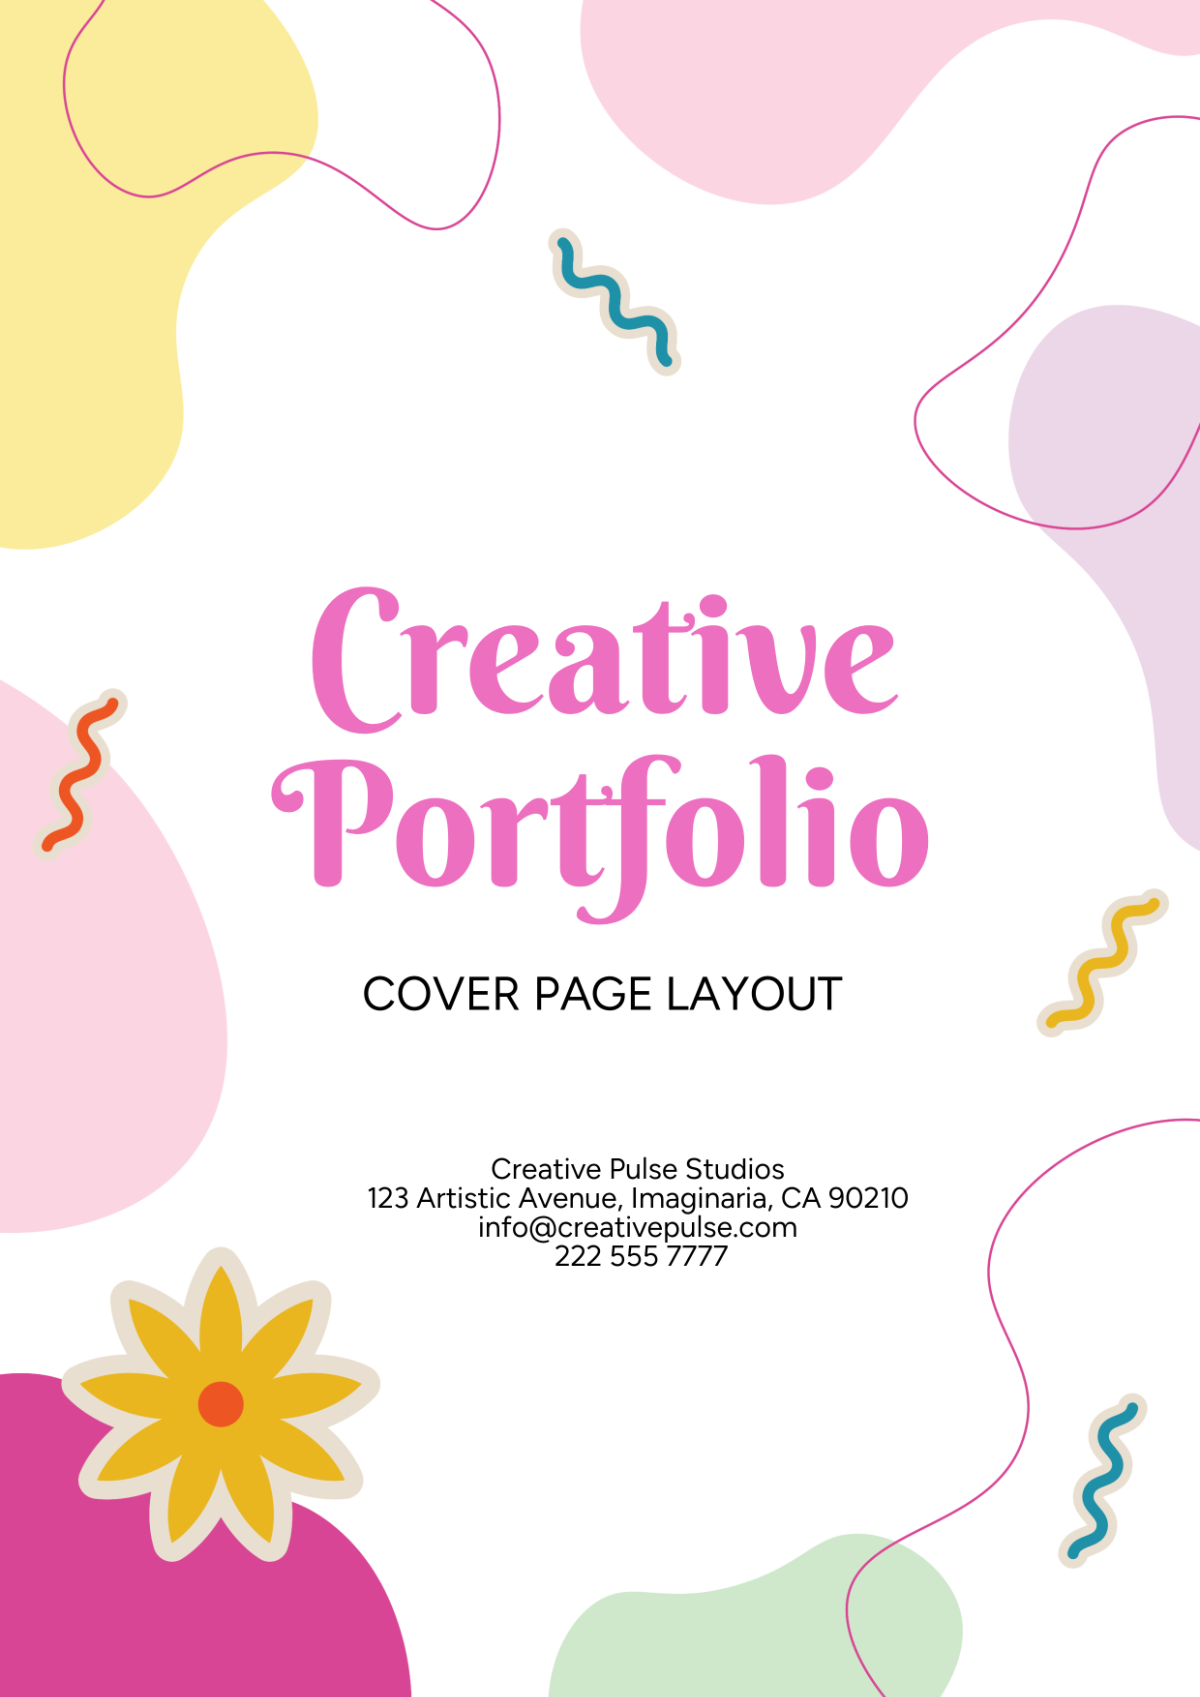 Creative Portfolio Cover Page Layout